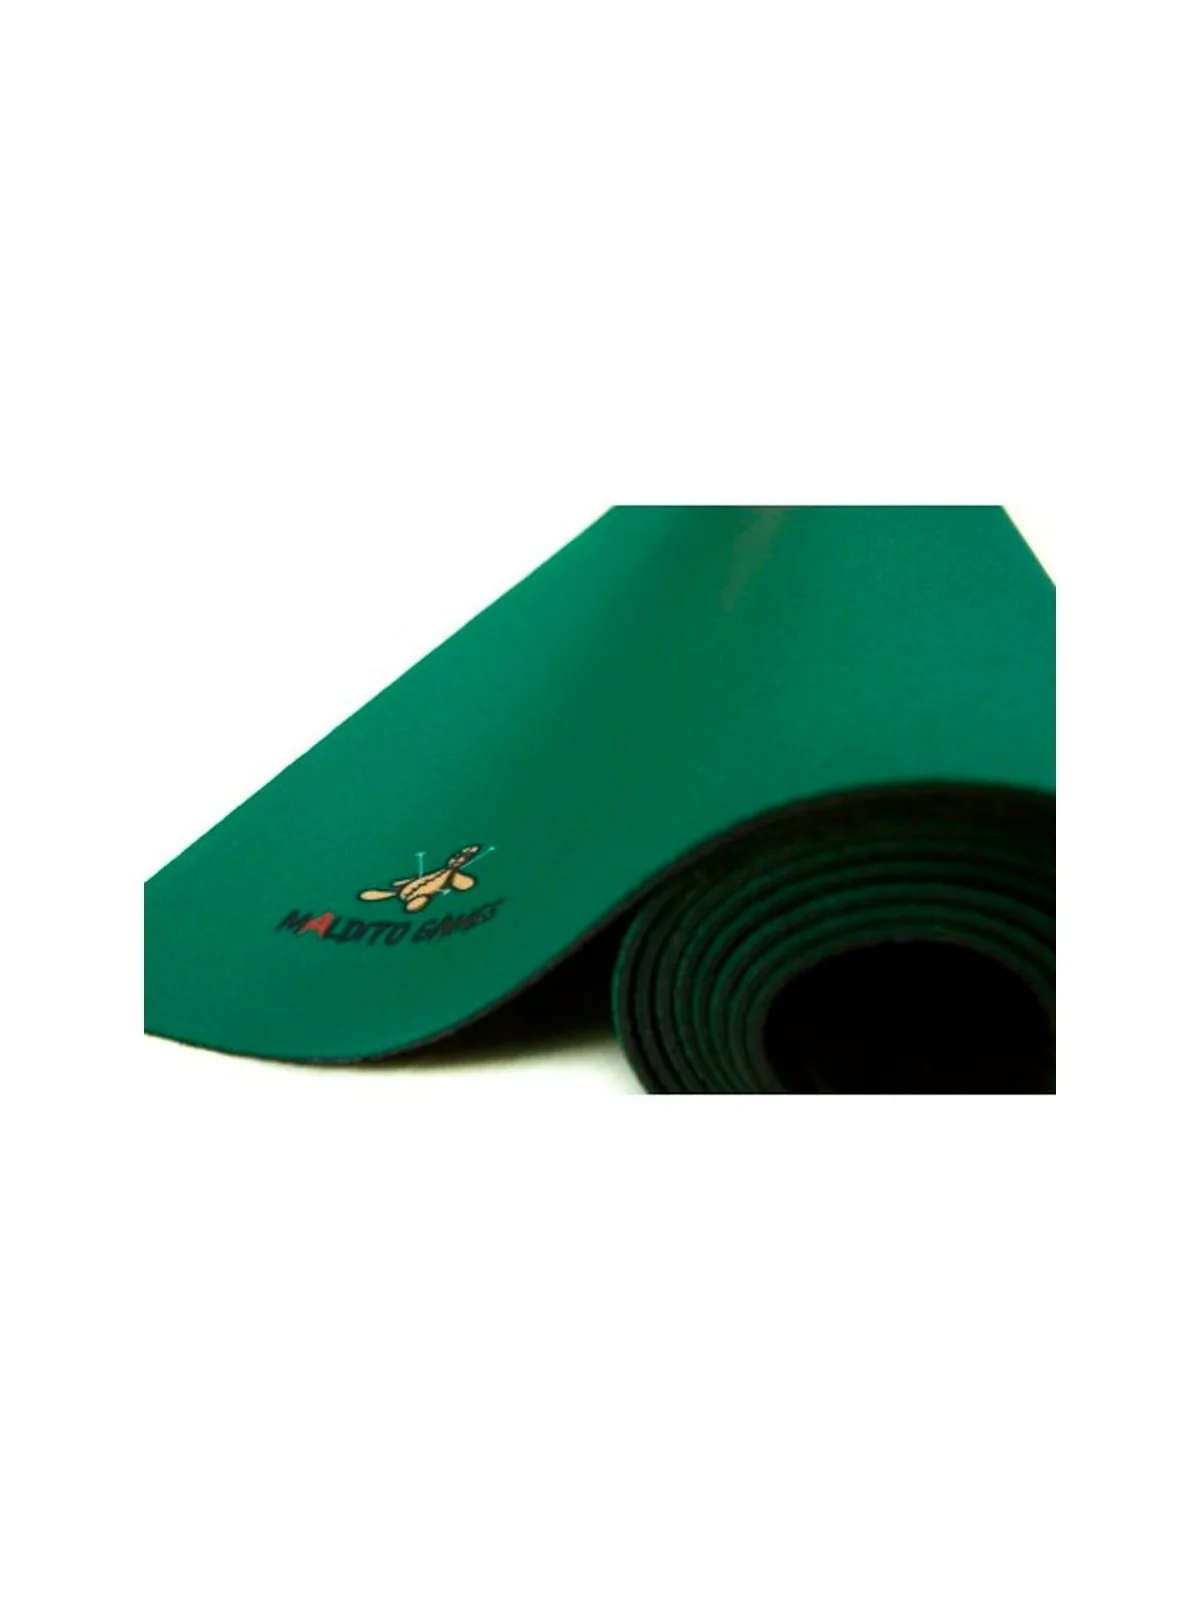 Comprar Tapete de Neopreno 140x80cm - Verde Liso barato al mejor preci